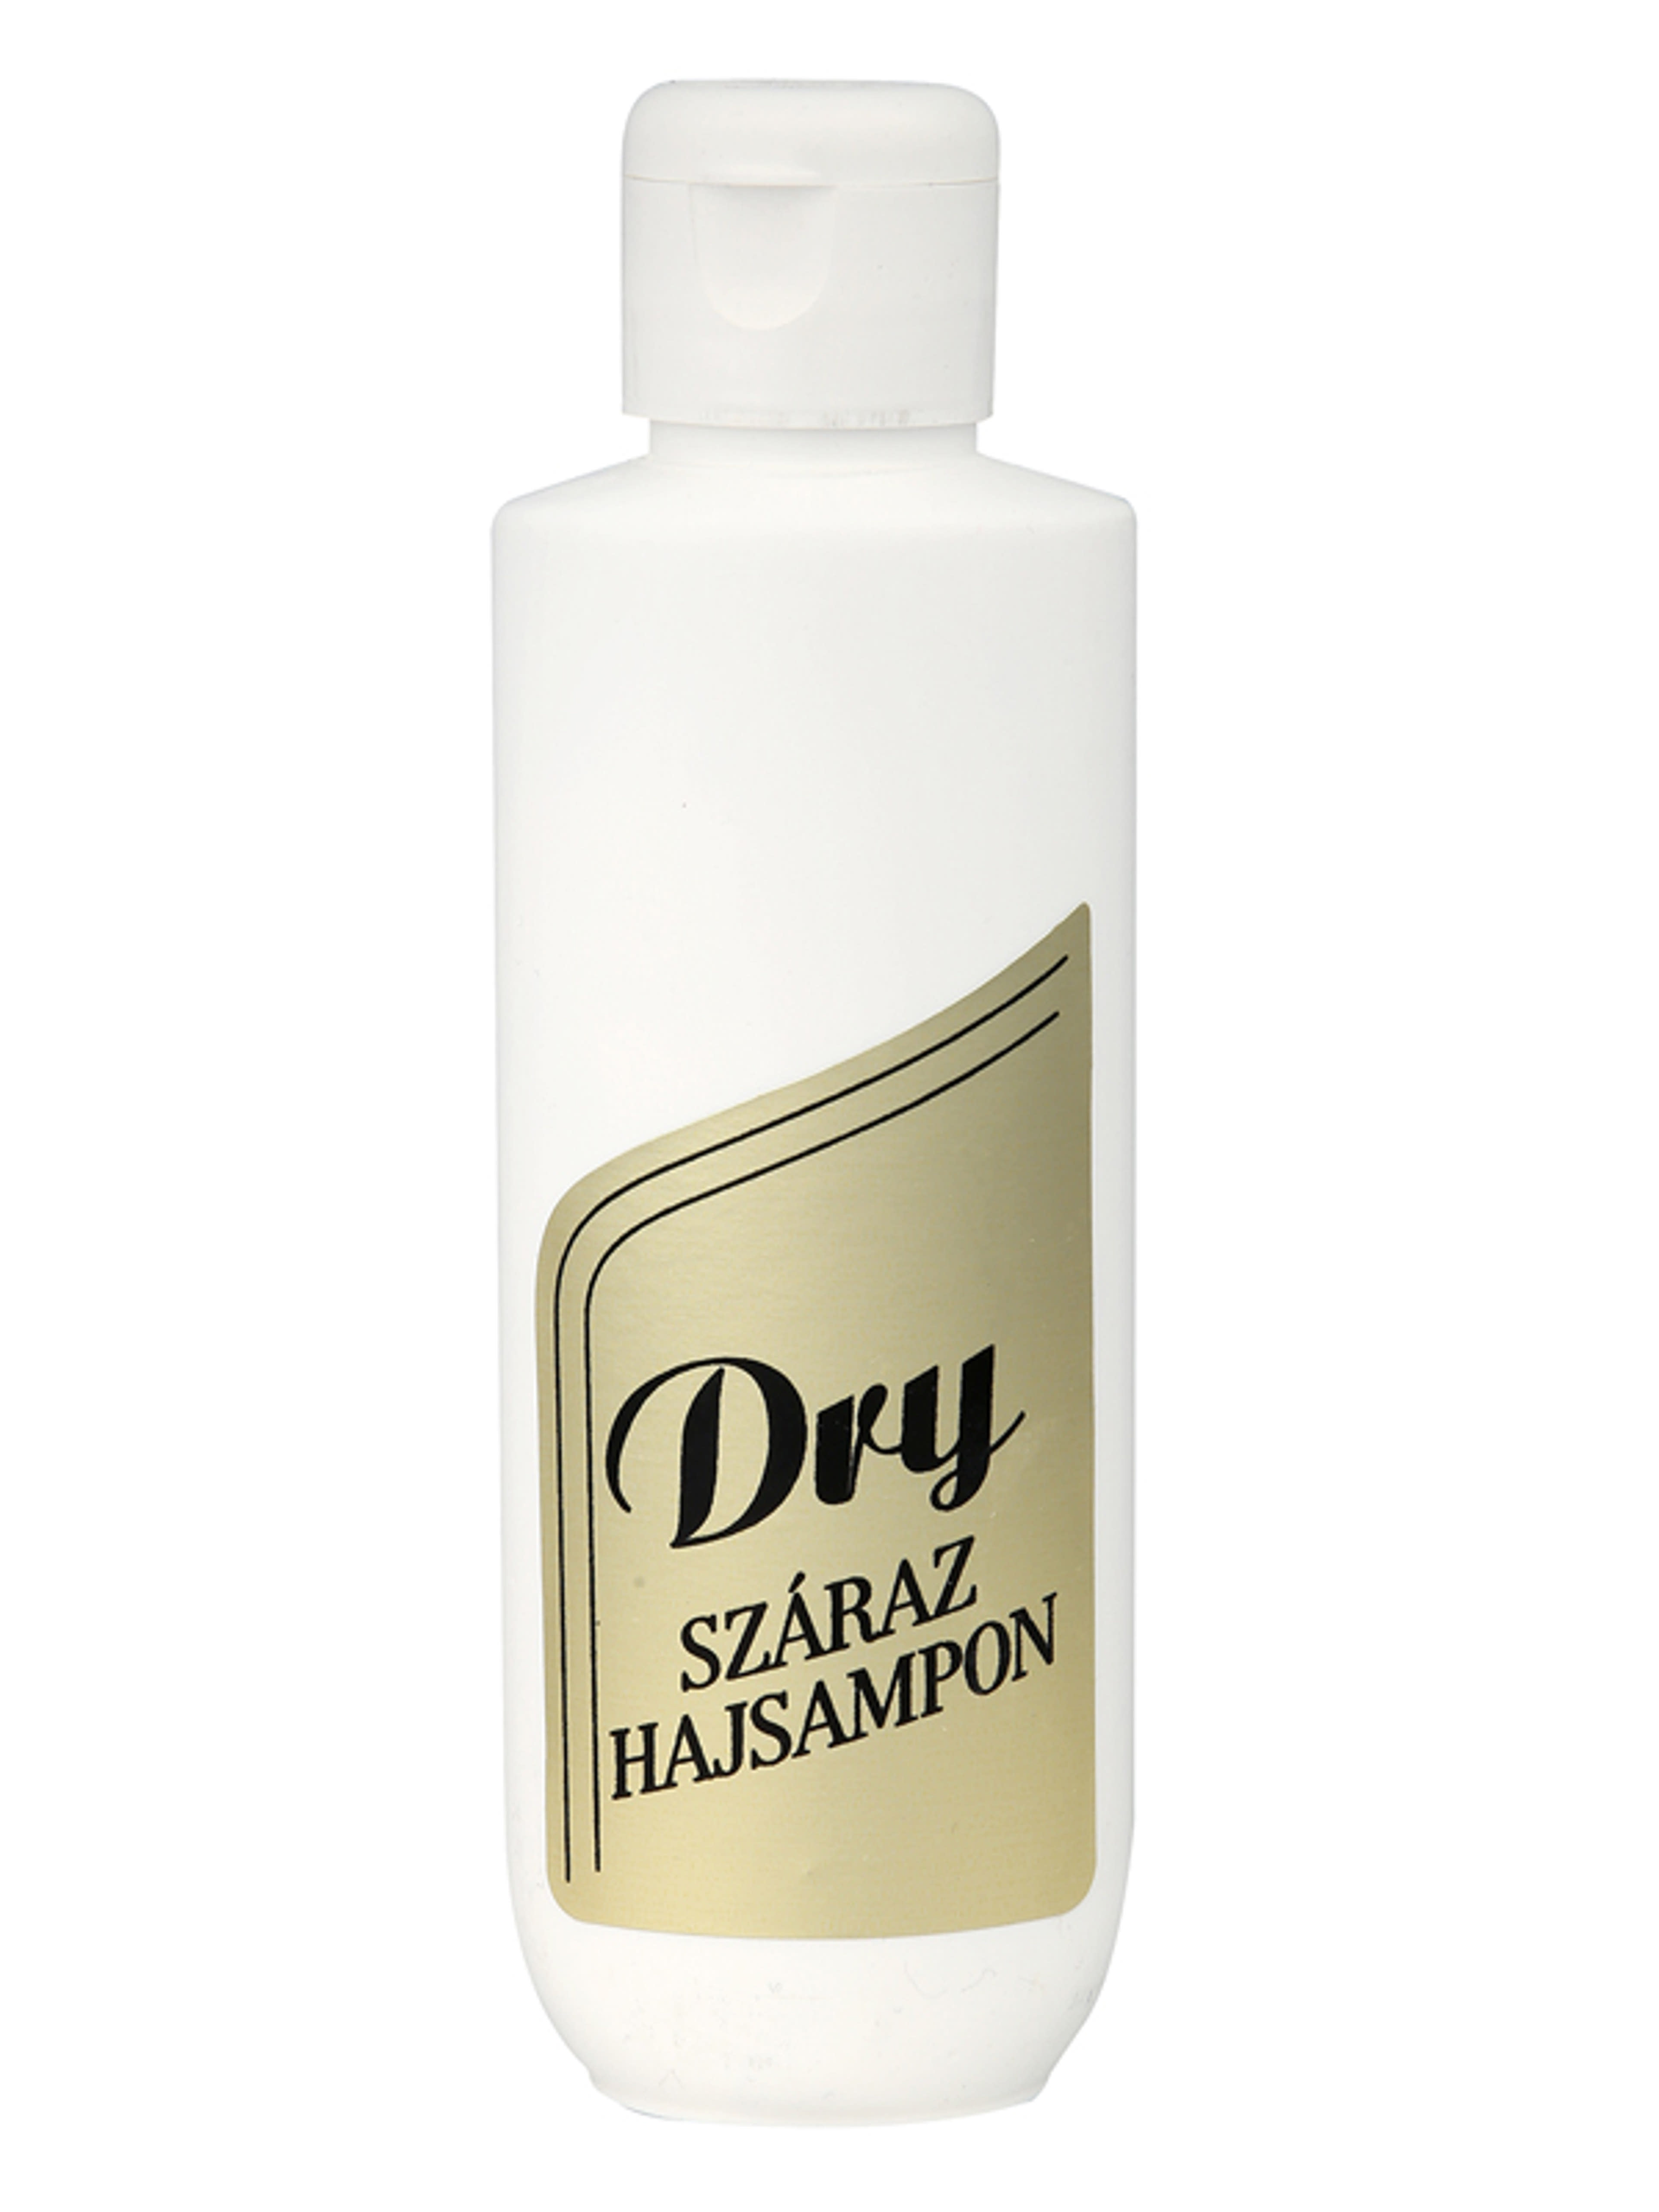 Dry Szárazsampon - 50 g